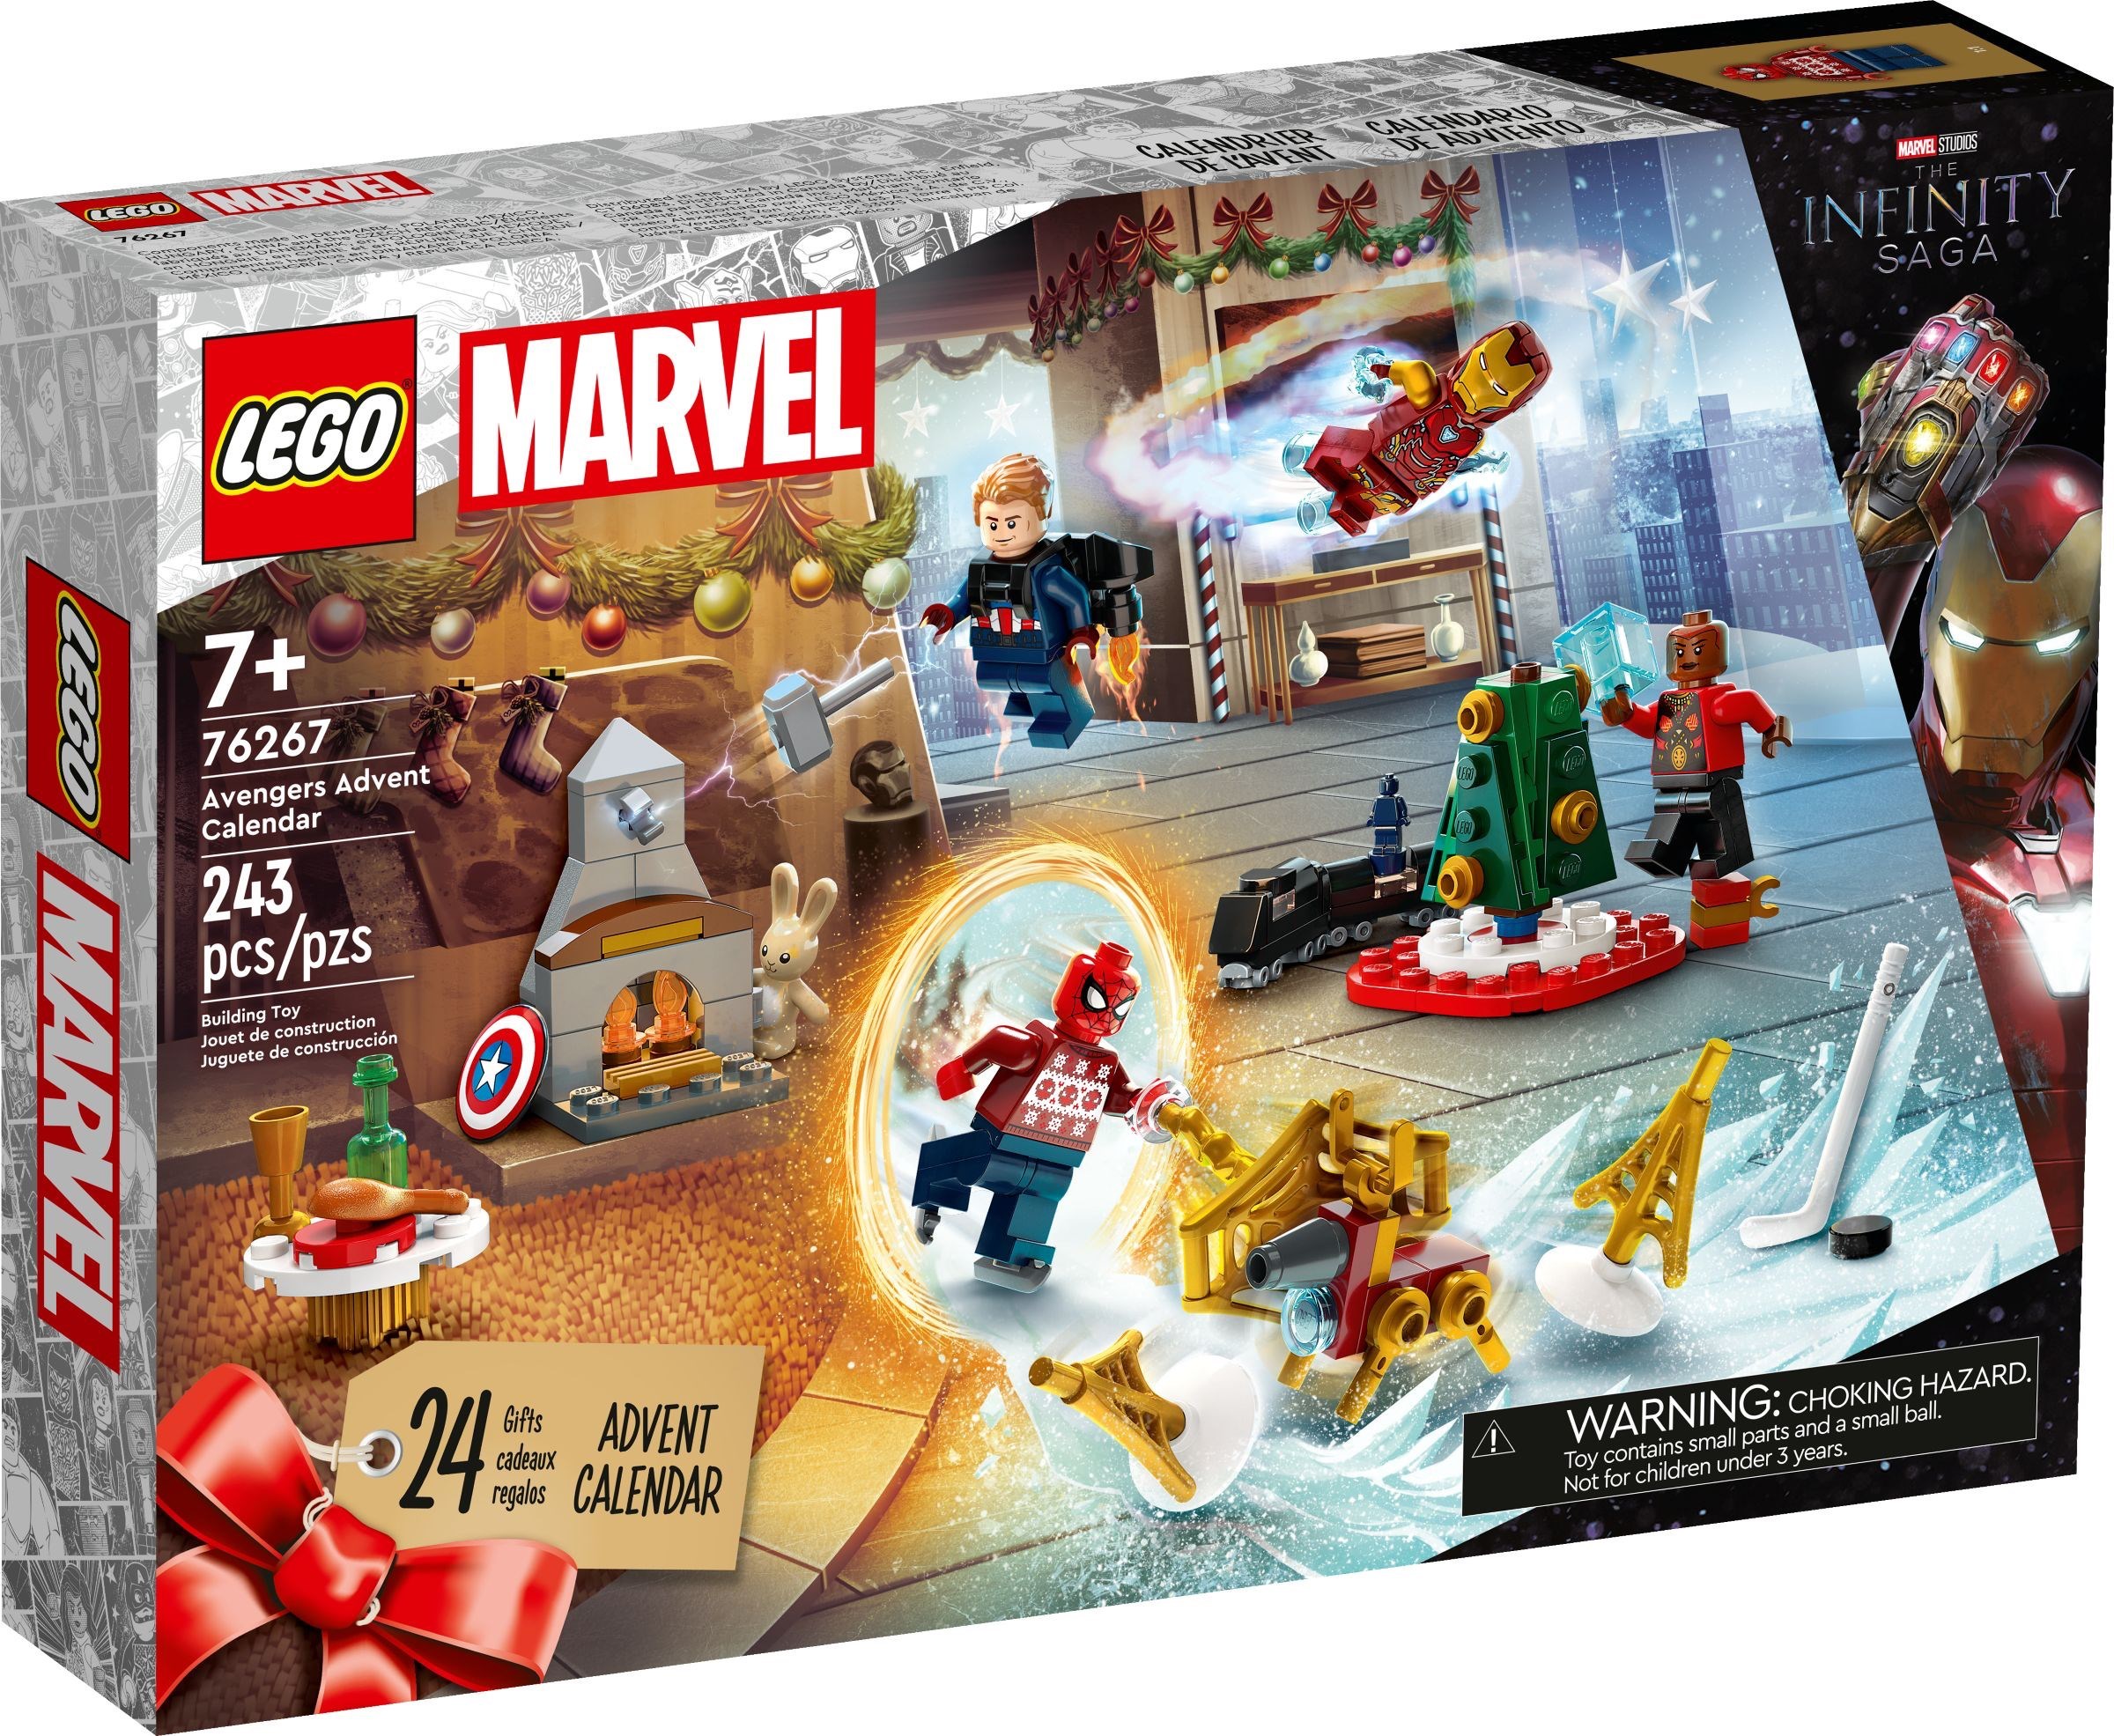 LEGO Disney March 2022 Official Set Images - The Brick Fan